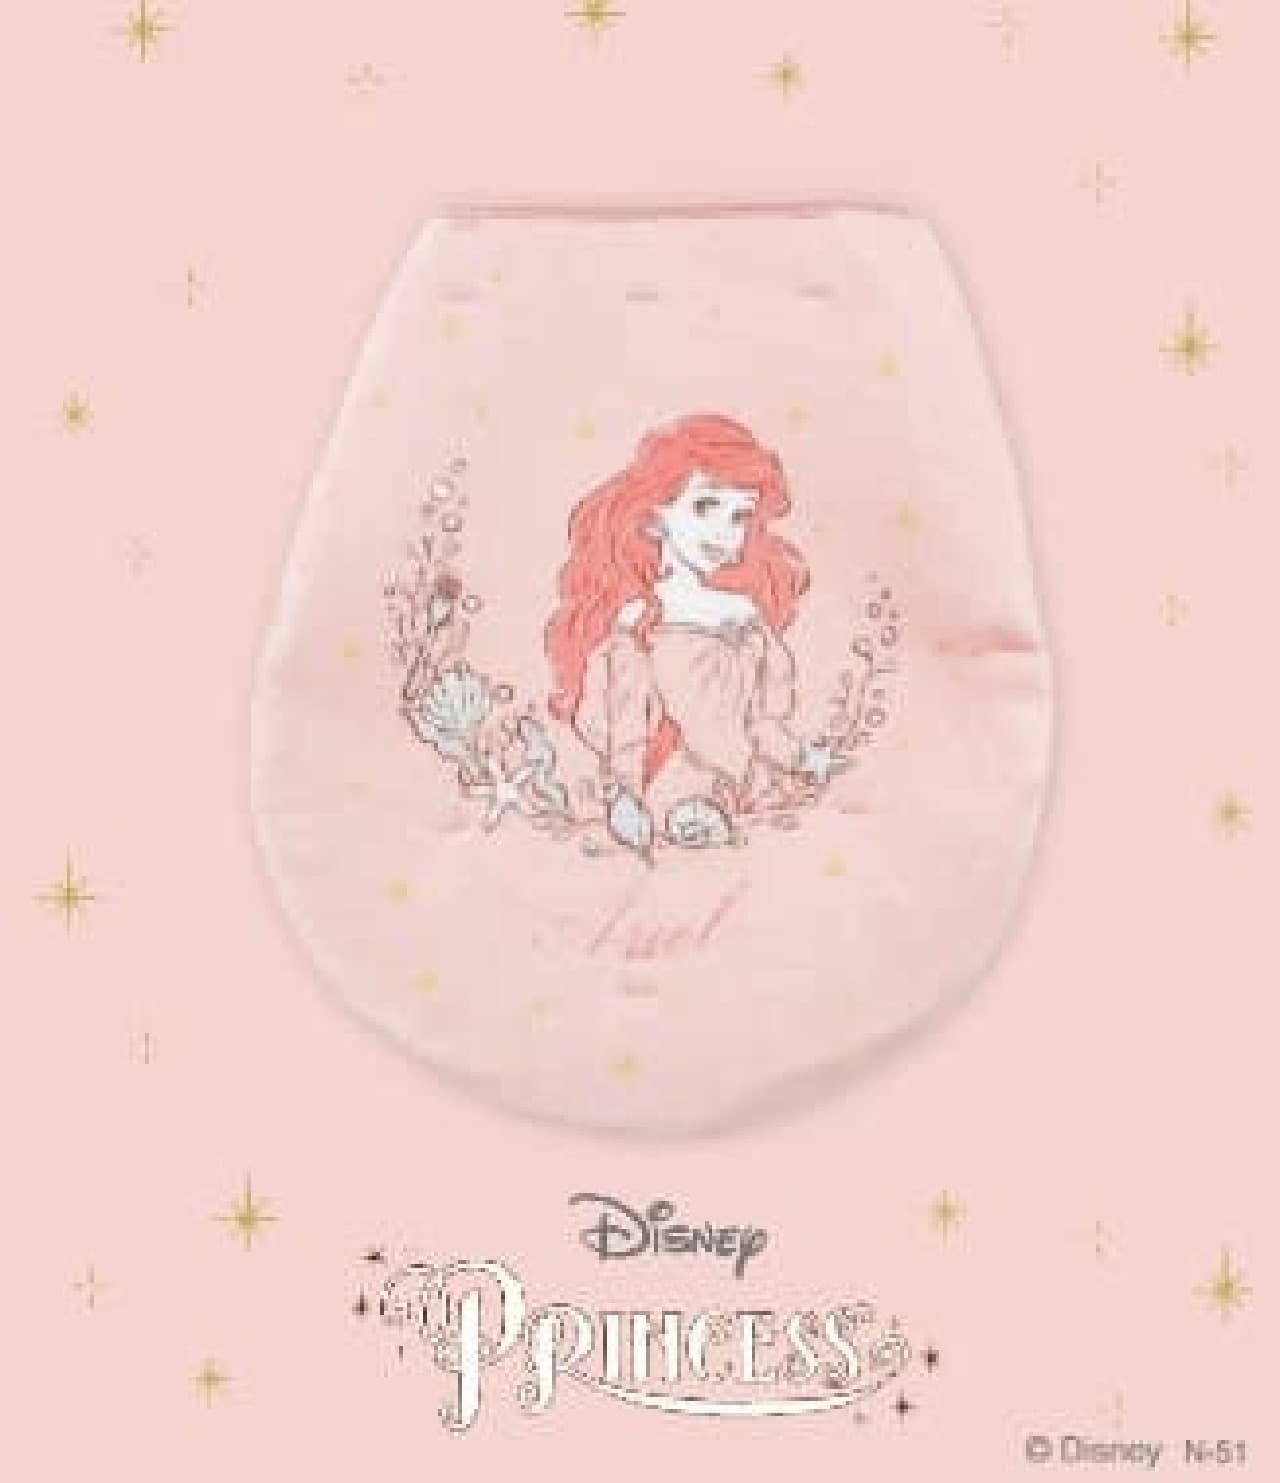 [Disney Princess] Toilet lid cover